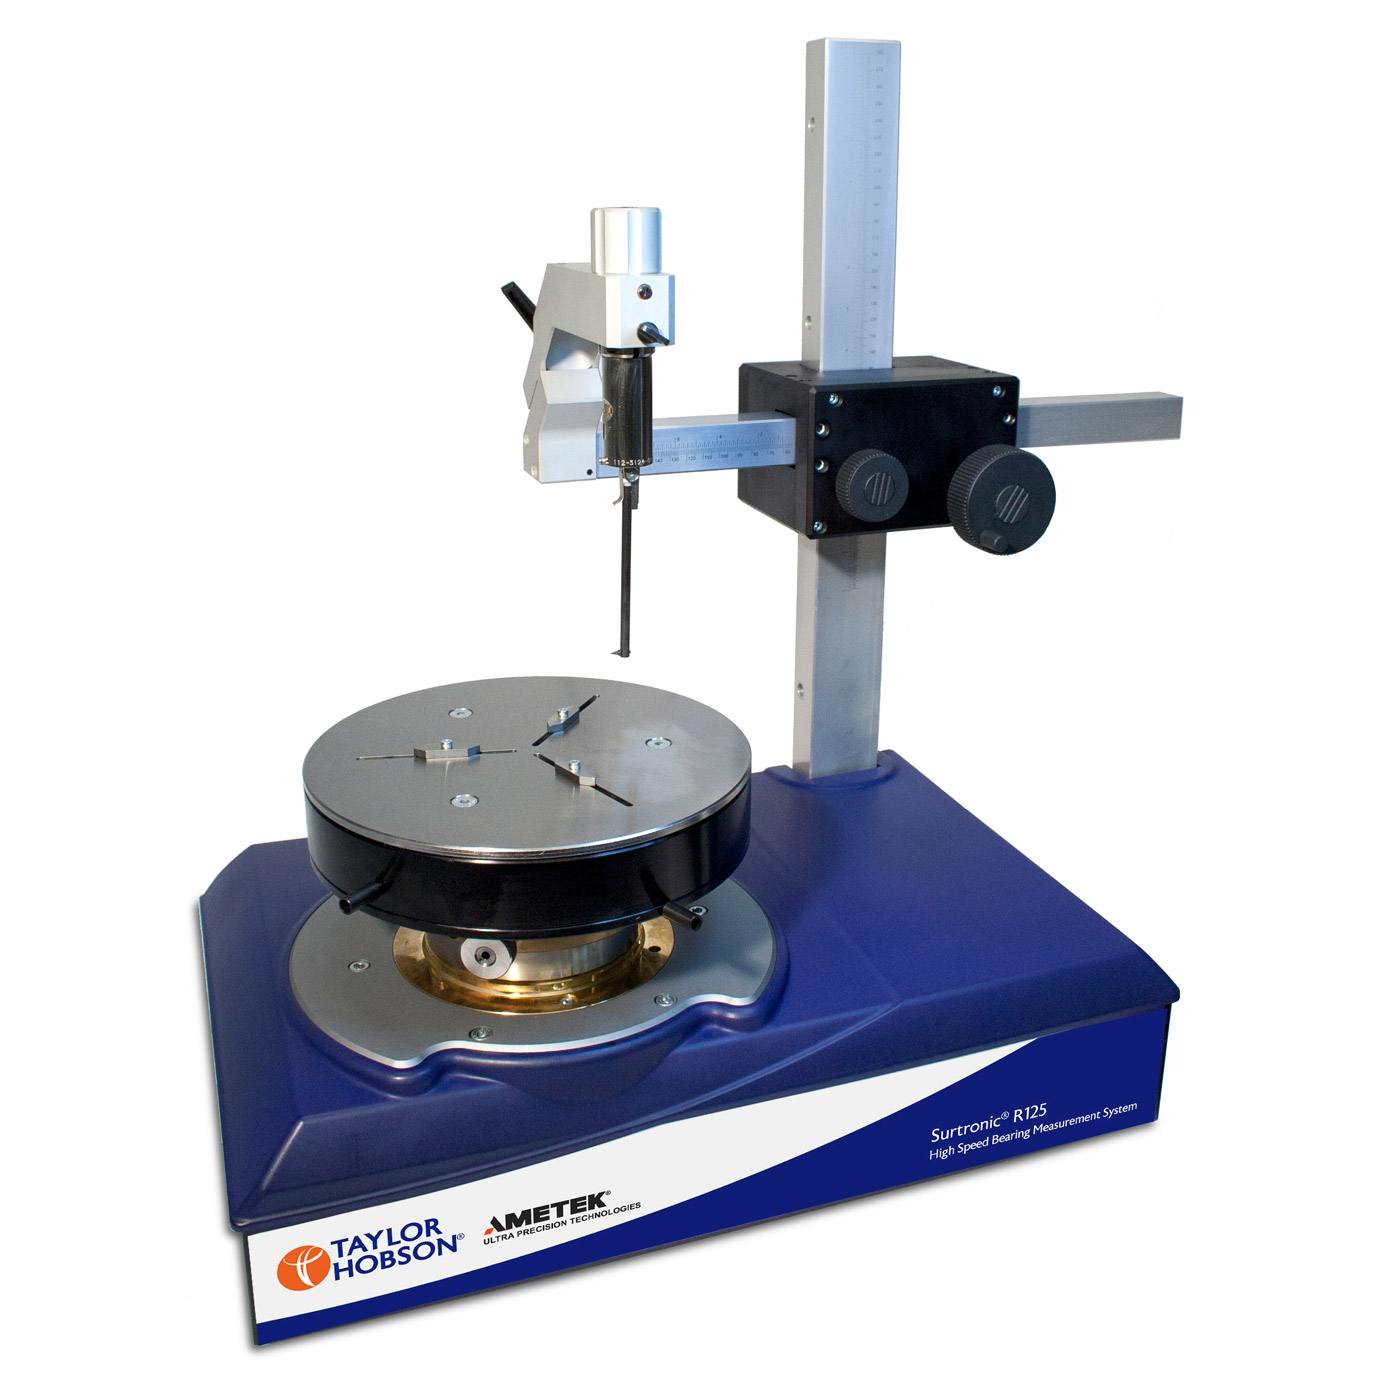 Surtronic R-100系列高速圓度測量系統